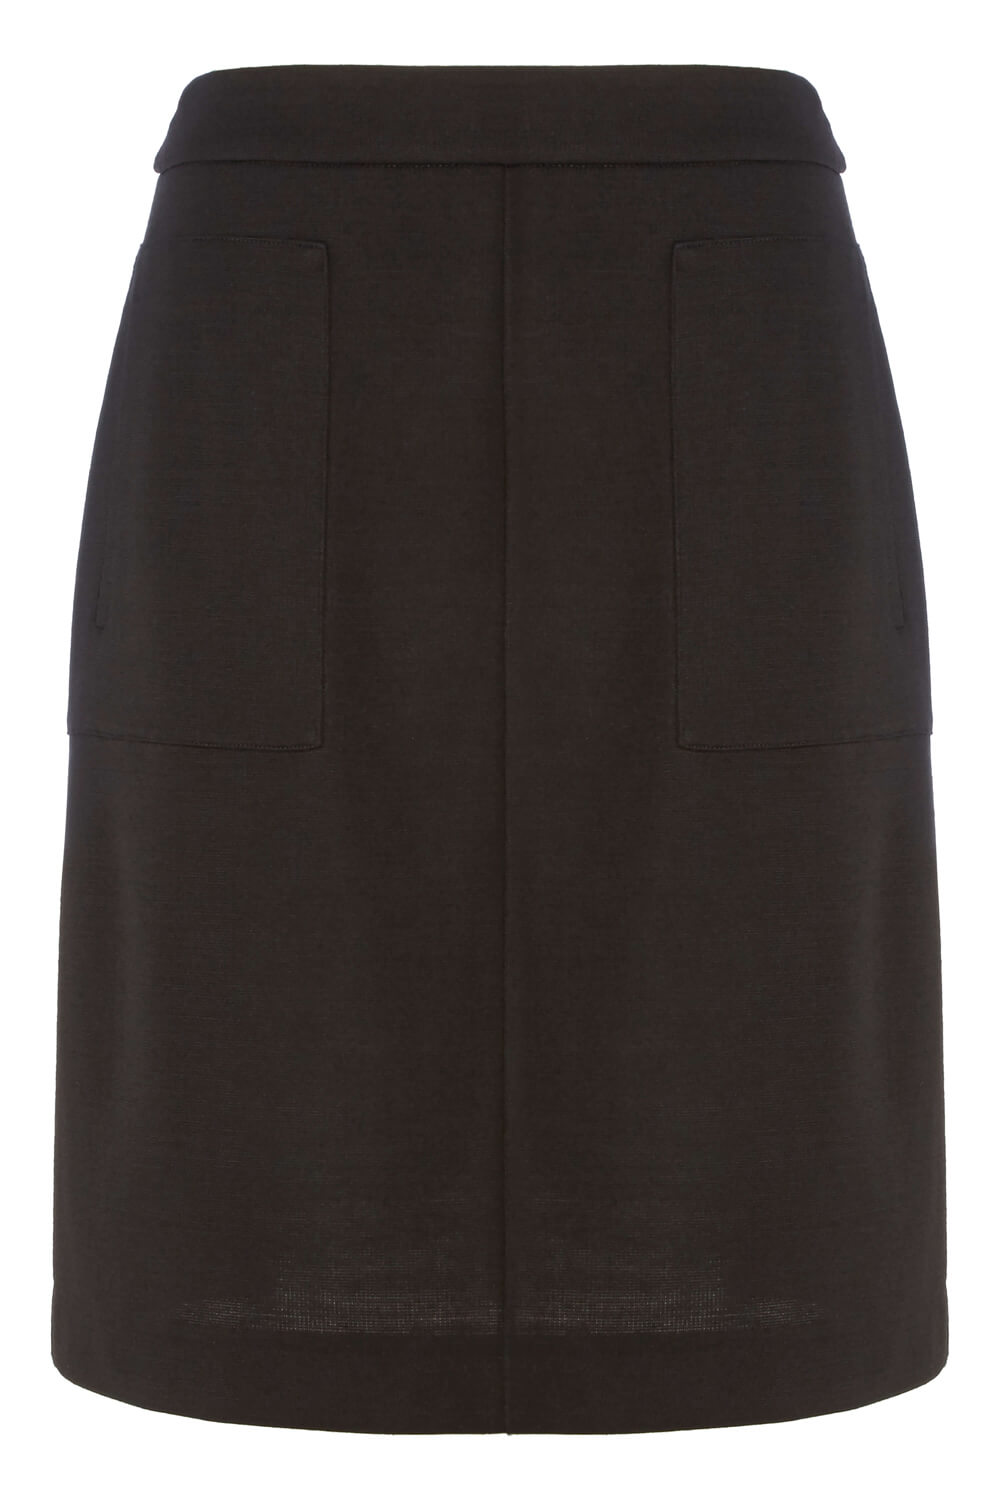 Textured Ponte Skirt in Black - Roman Originals UK